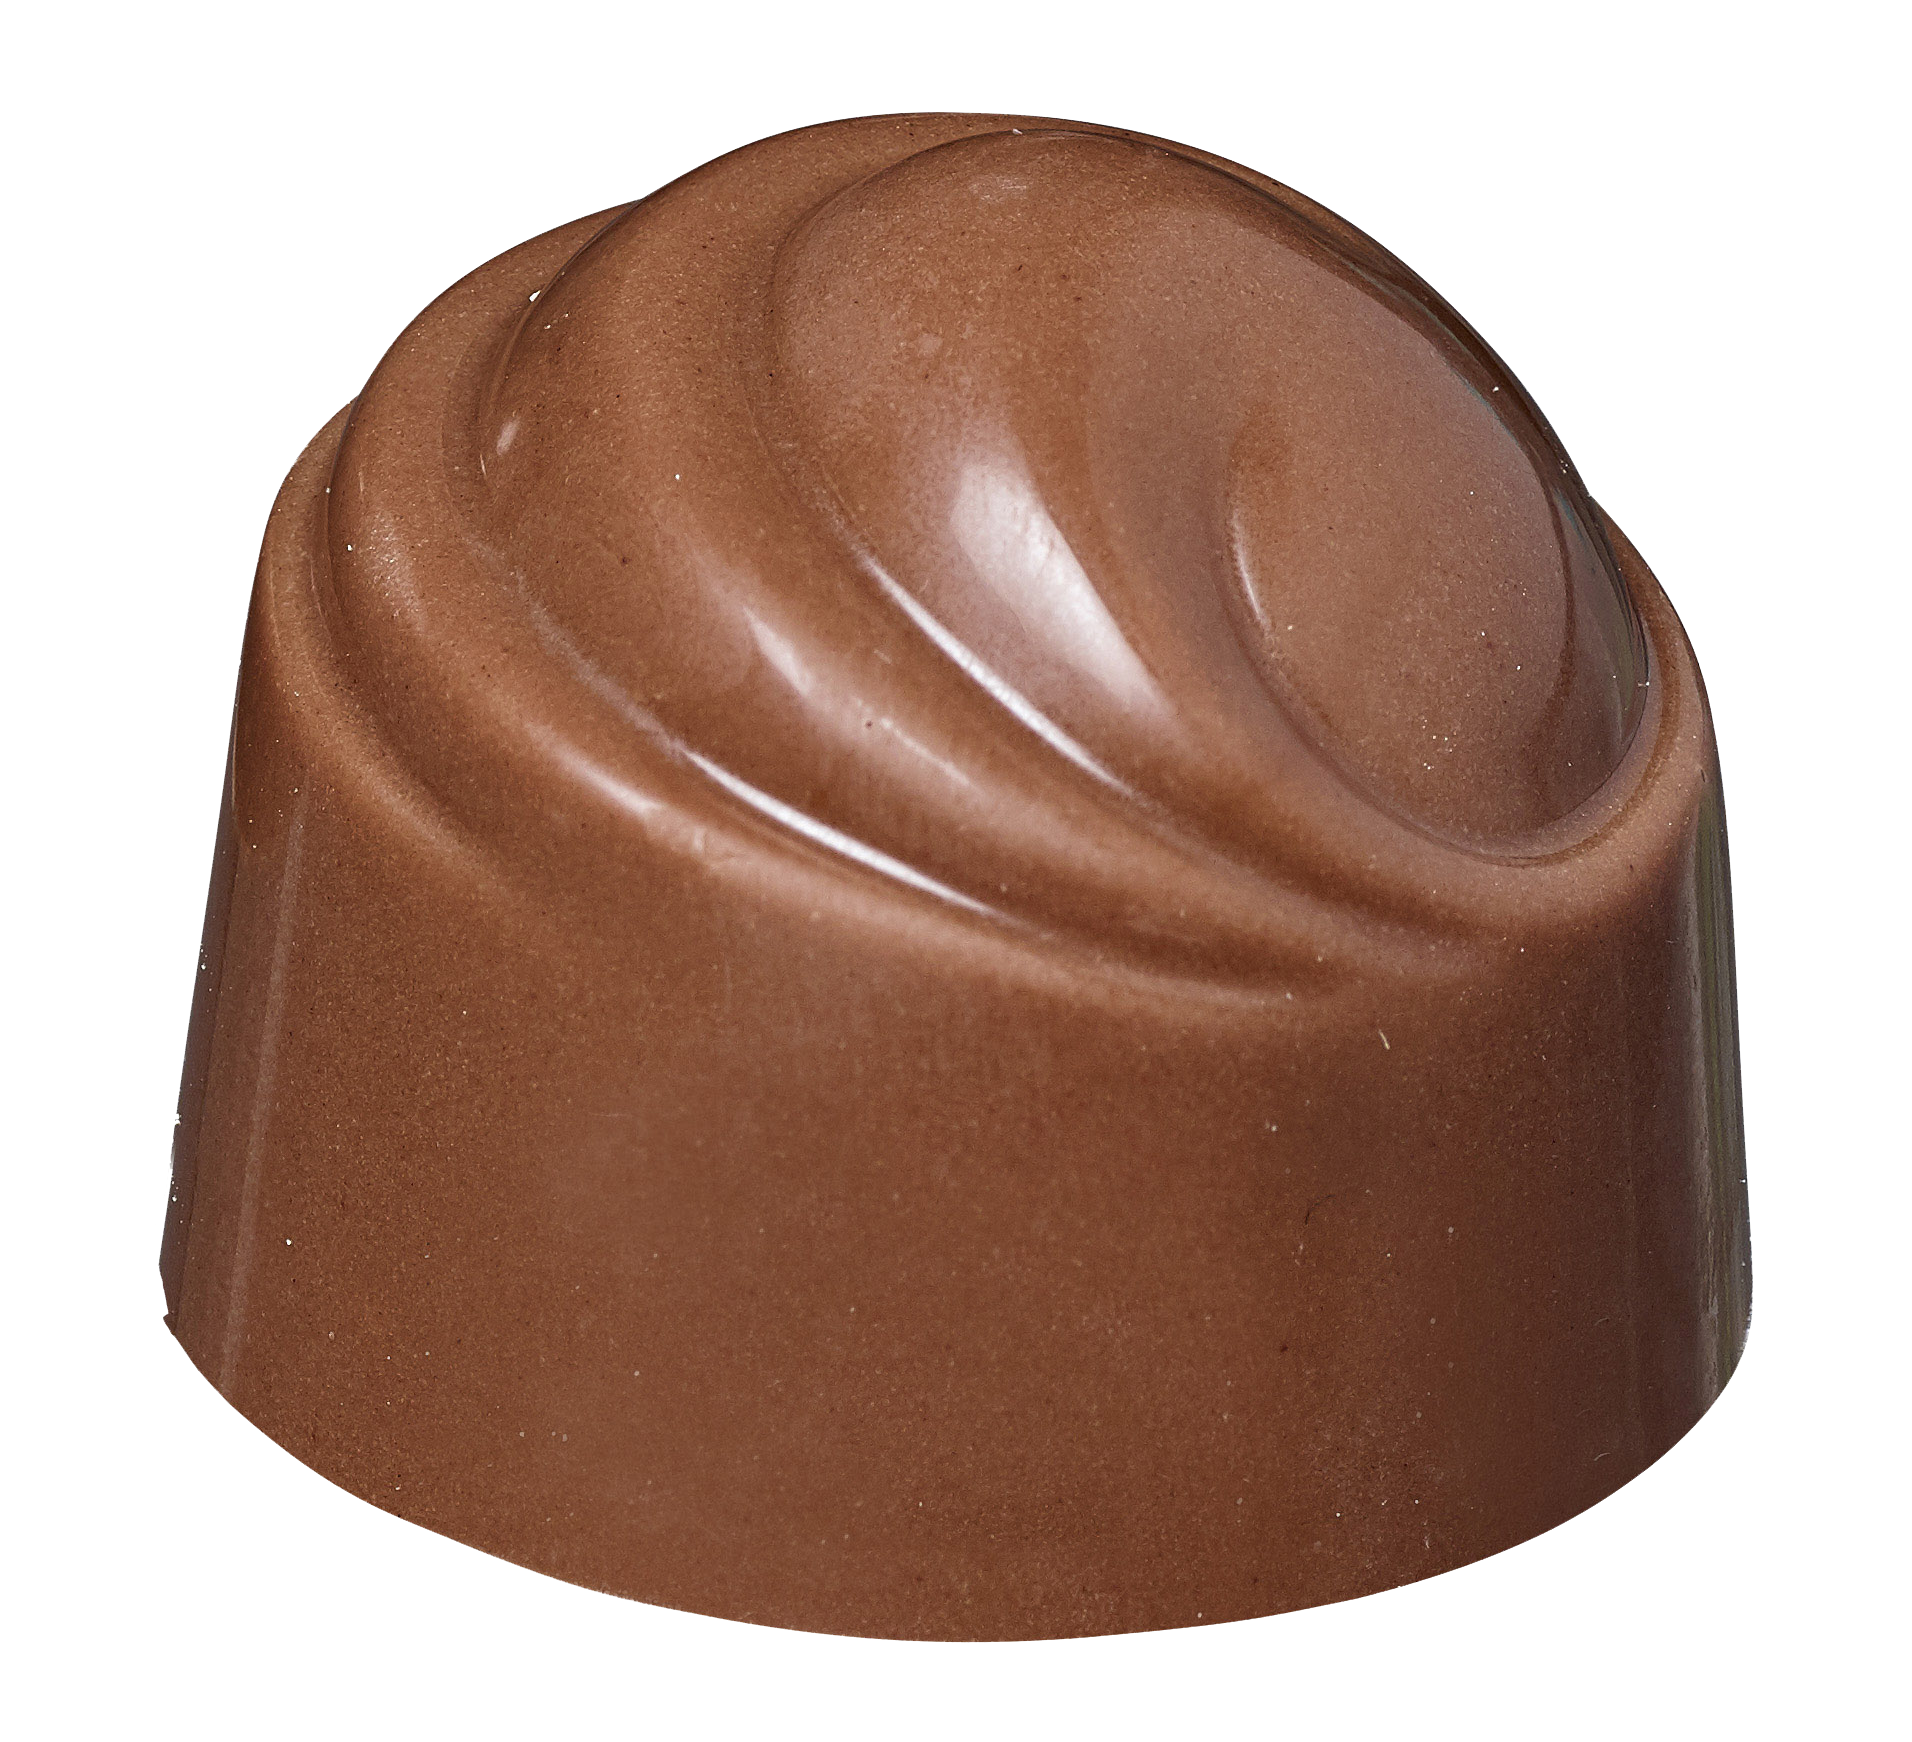 Belledonne Krokante praliné(omhuld met melkchocolade) bio 1kg - 002679